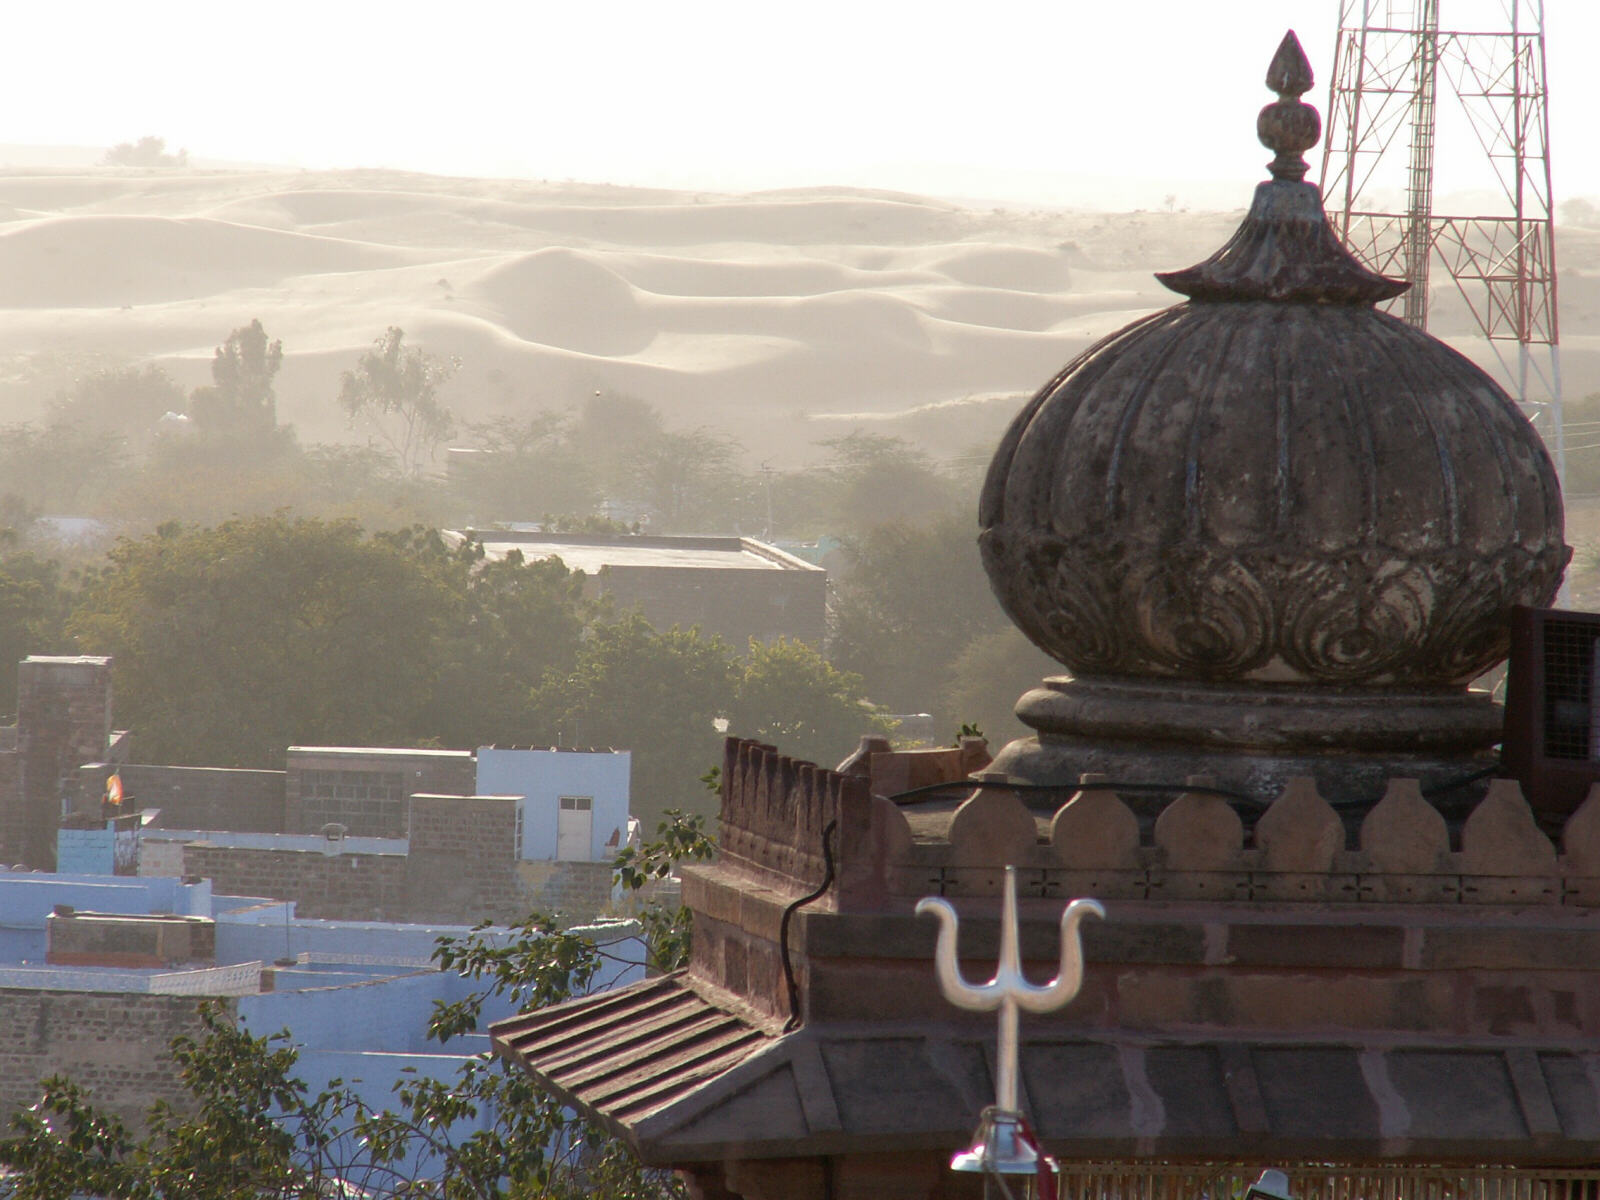 Sachiya Mata Jain temple and sand dunes in Osiyan, Rajasthan